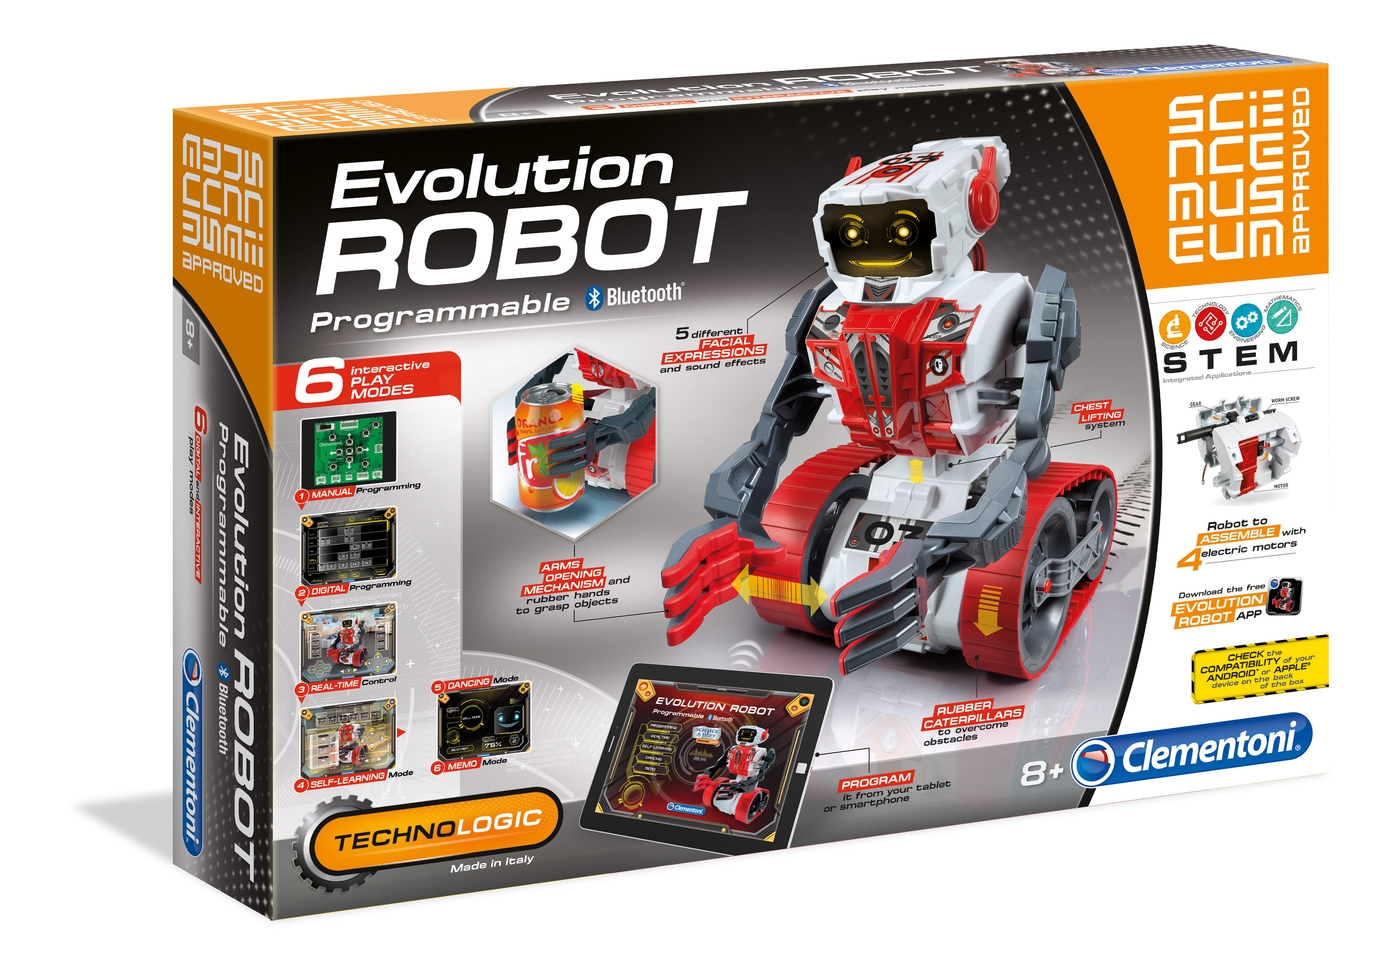 Evolution Robot Kit - ScientificsOnline.com